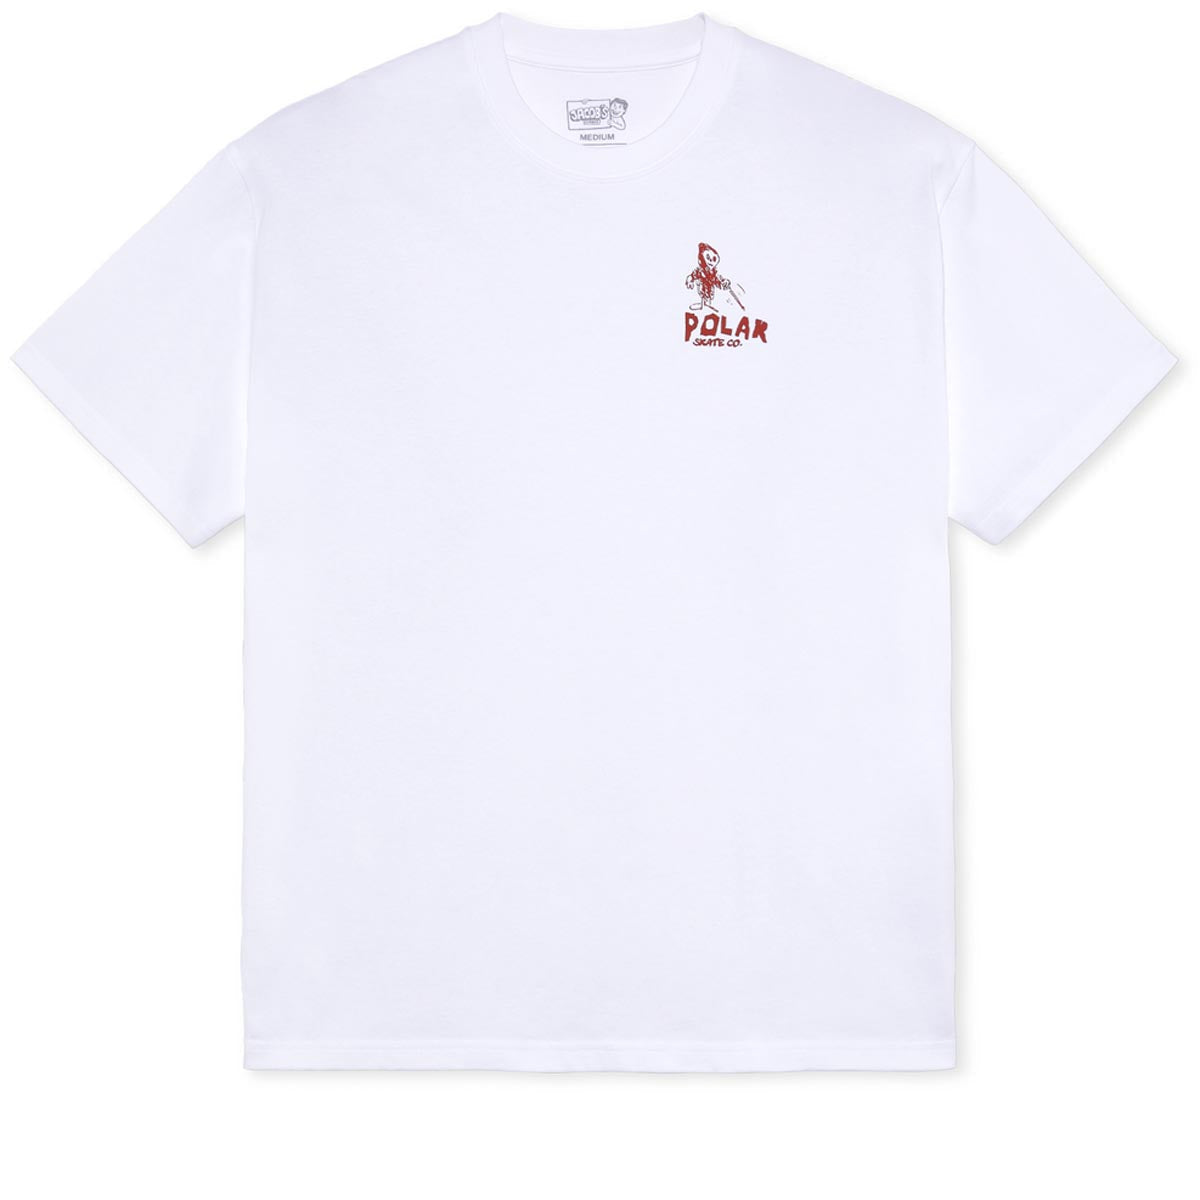 Polar Reaper T-Shirt - White image 1